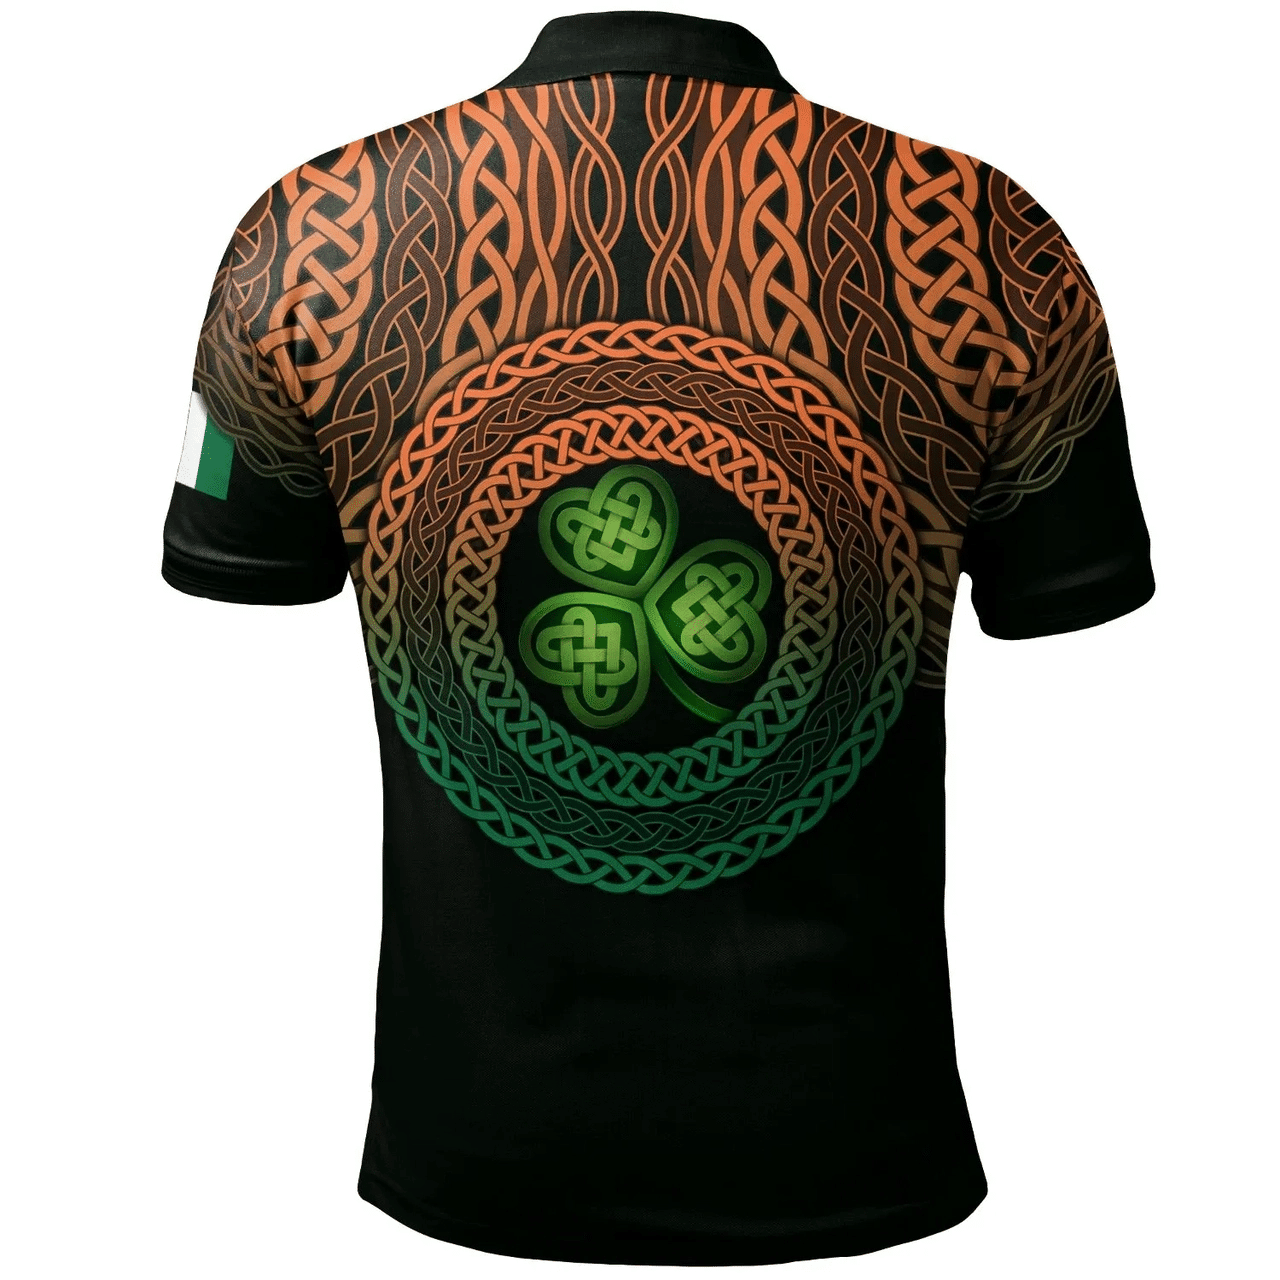 1stIreland Ireland Polo Shirt - Lester or McAlester Irish Family Crest Polo Shirt - Celtic Pride A7 | 1stIreland.com